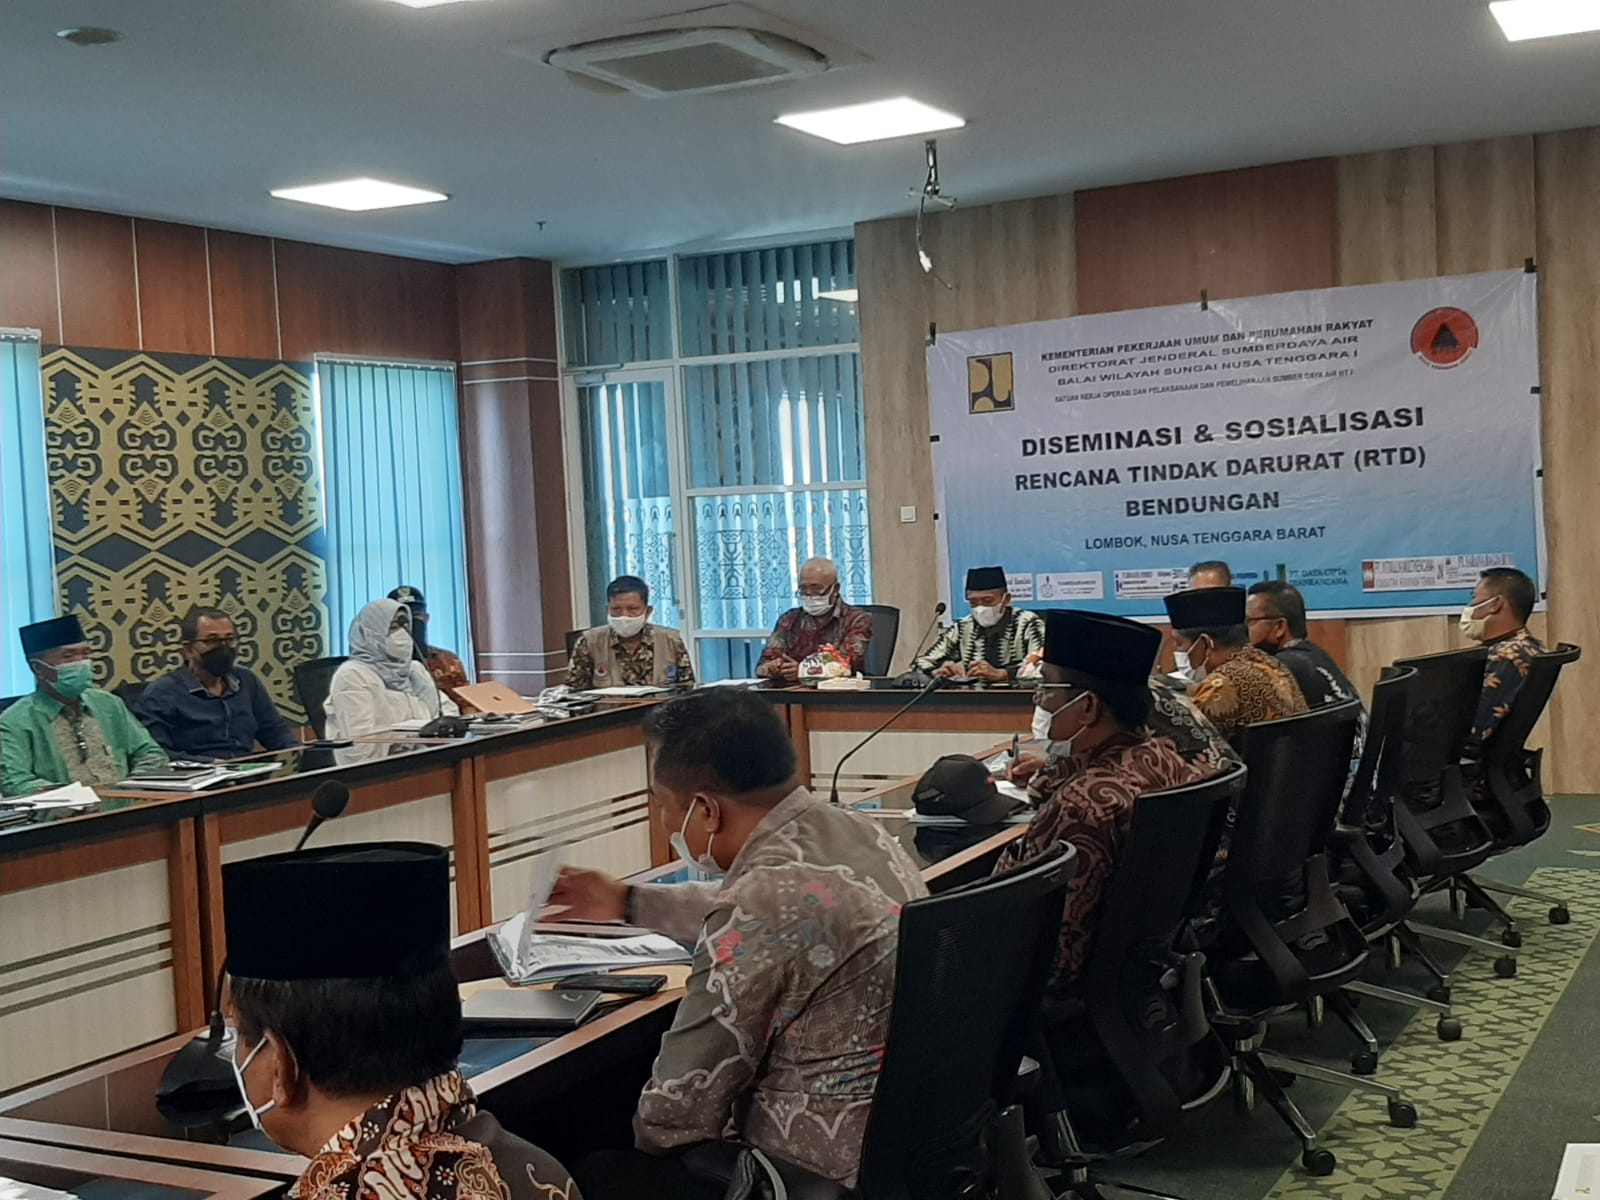 Diseminasi & Sosialisasi Rencana Tindak Darurat (RTD) Bendungan Lombok di Ballroom Lantai 5 Kantor Bupati